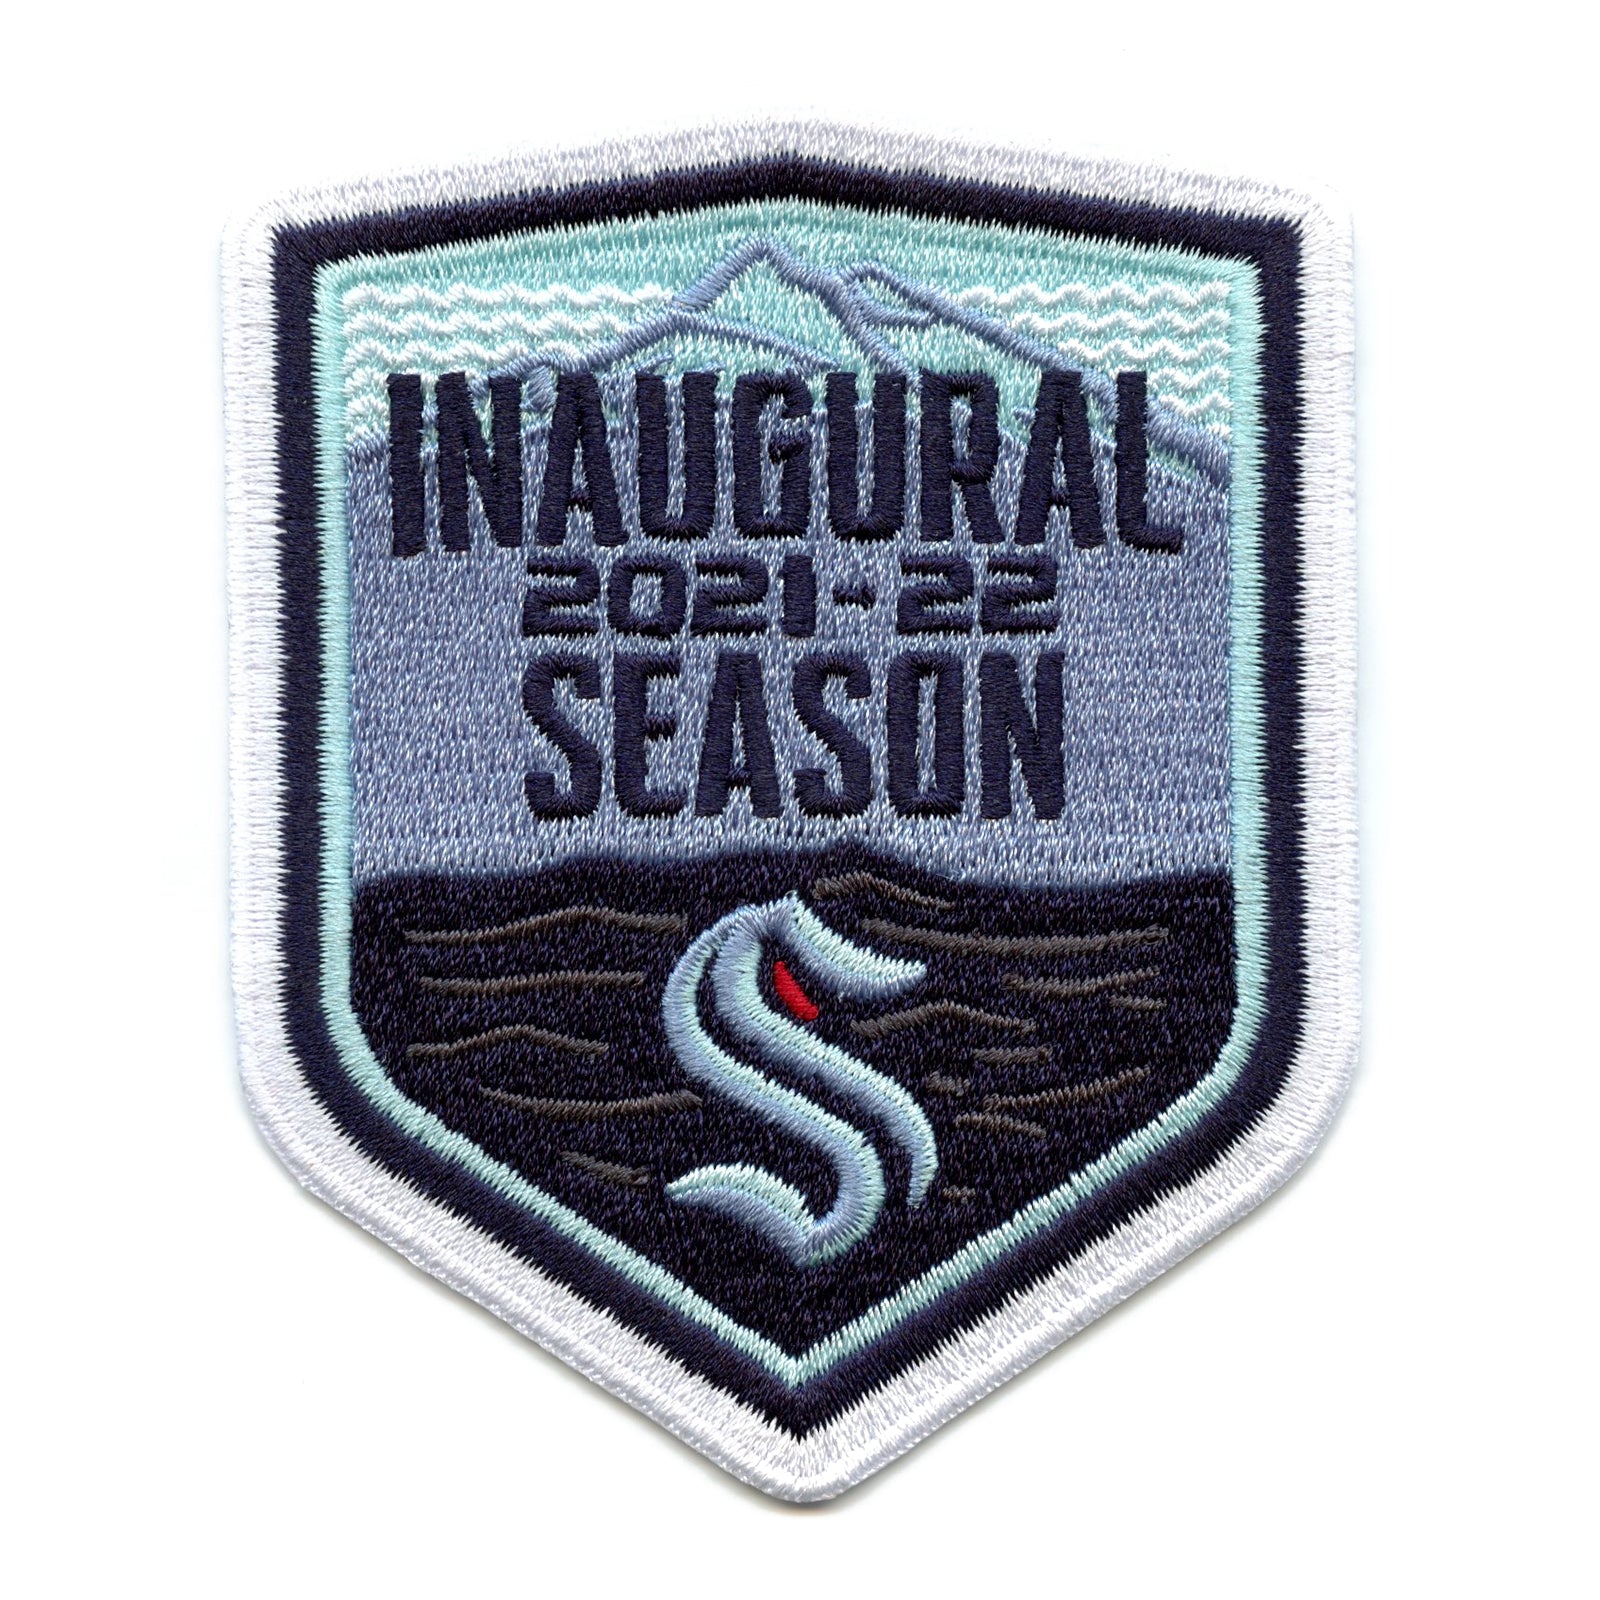 Seattle Kraken Inaugural NHL Season Jersey Patch (2021) 